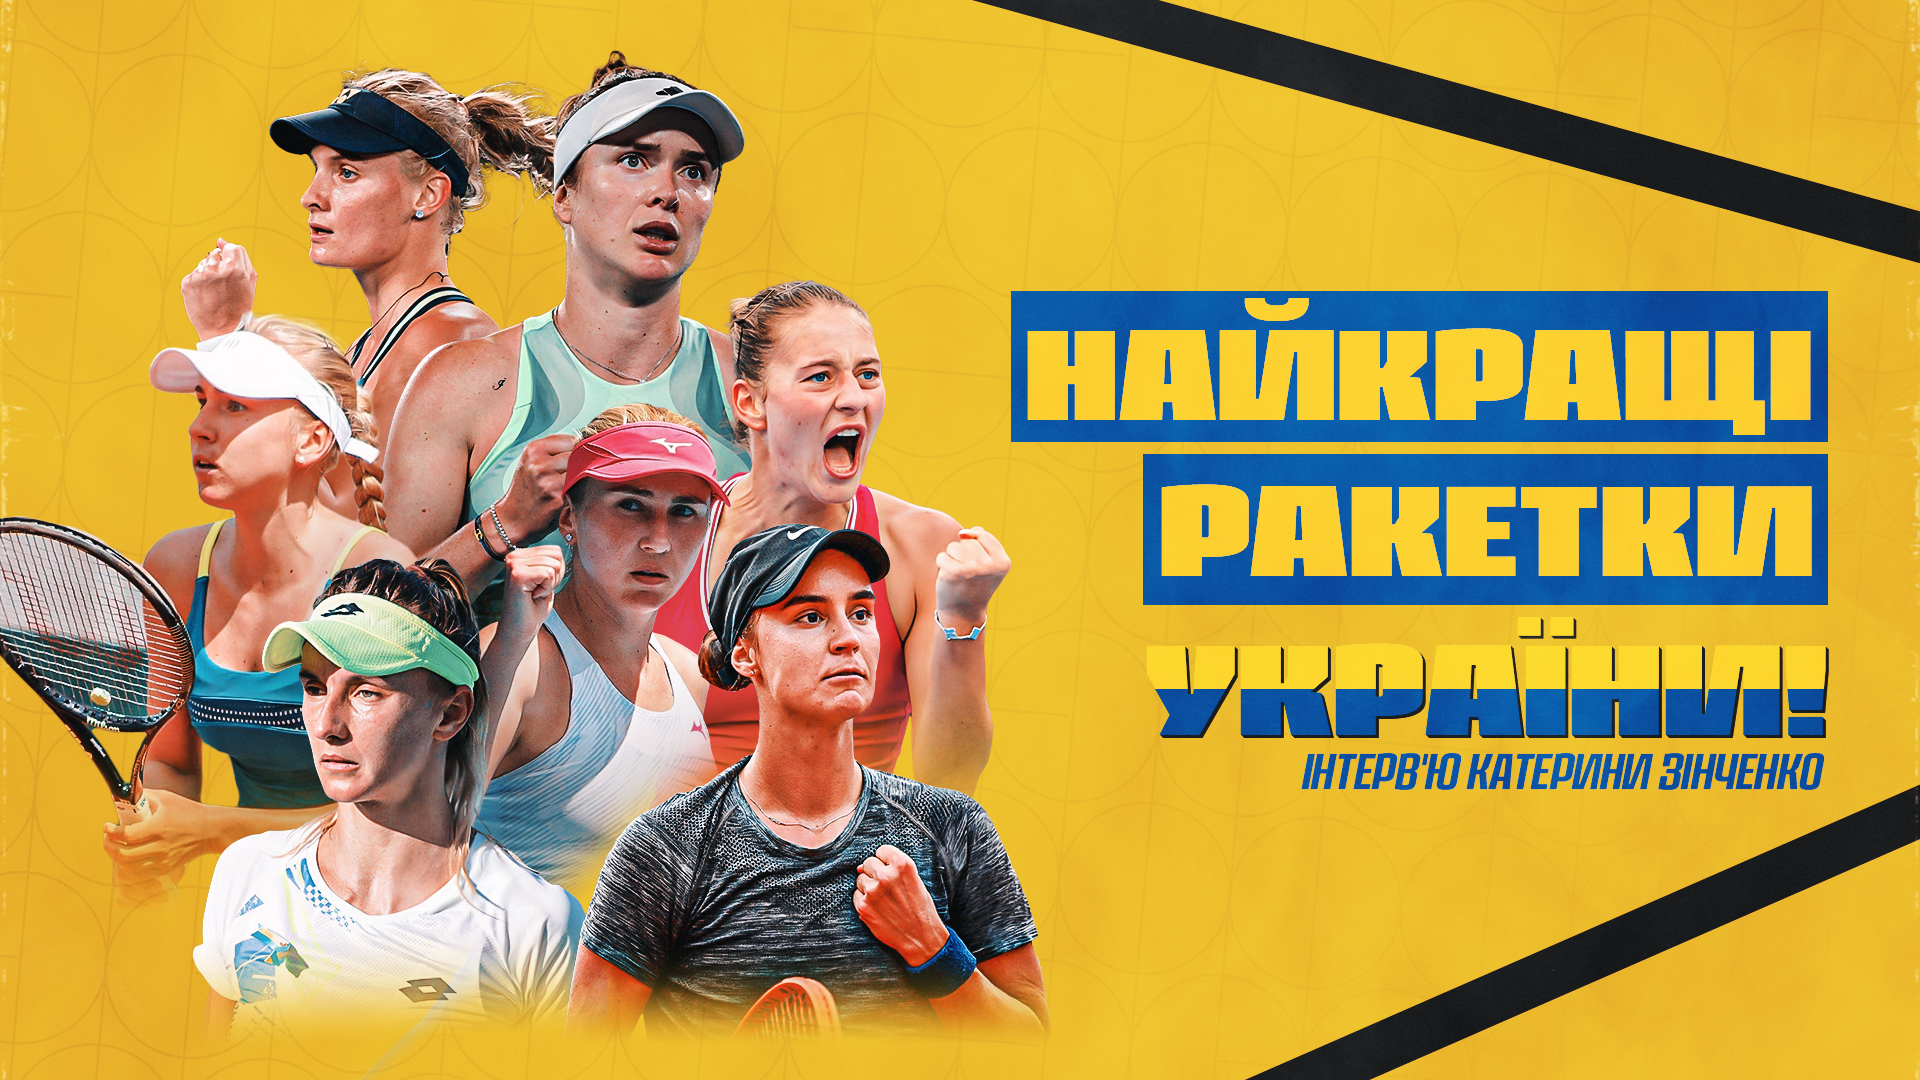 Les meilleures joueuses de tennis d’Ukraine : interview de Kateryna Zinchenko